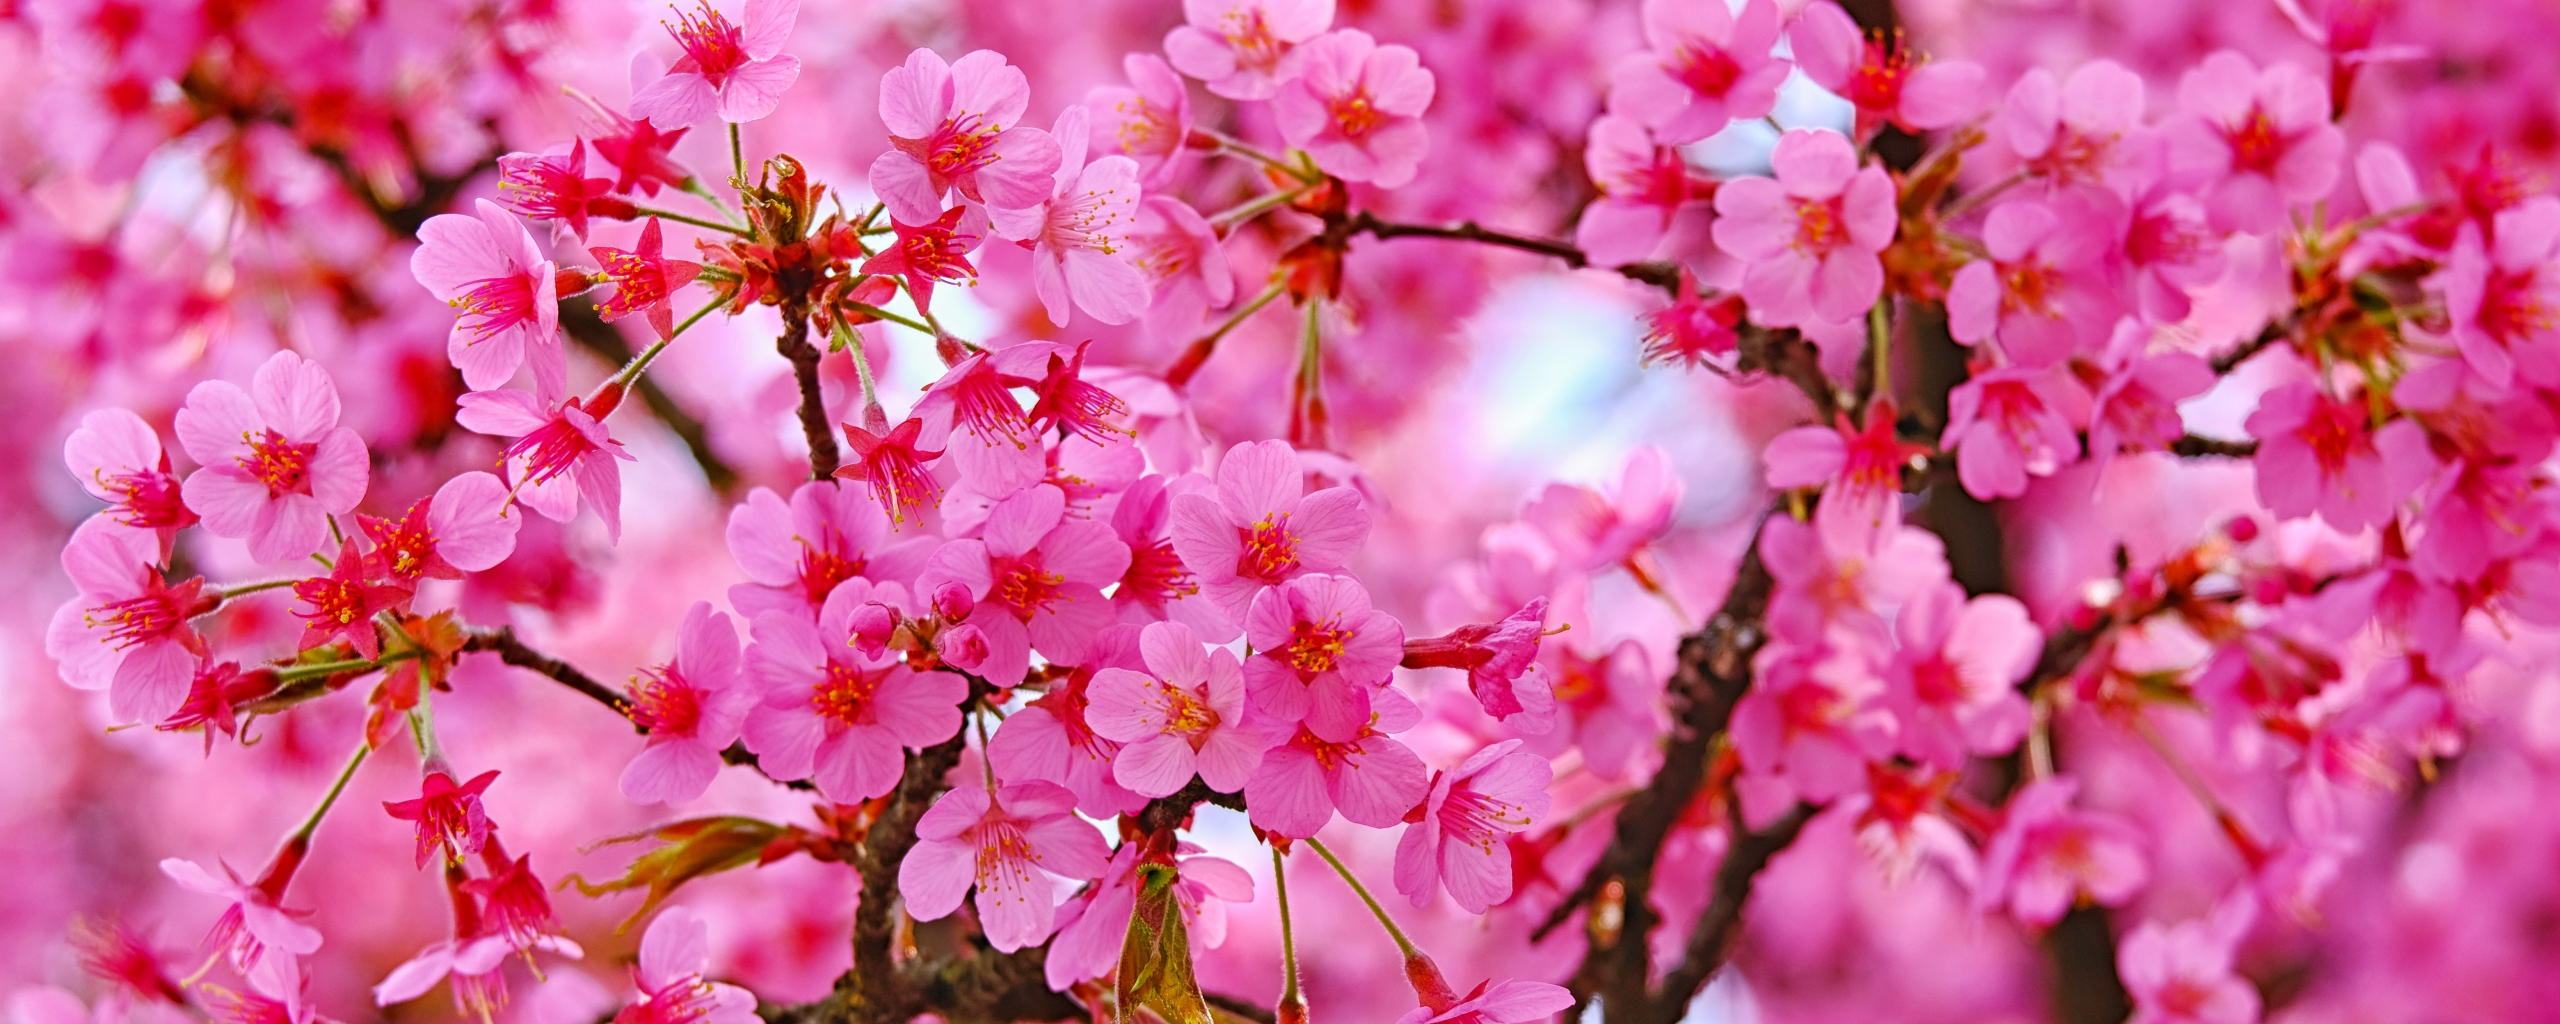 Cherry blossom, pink flowers, nature, 2560x1024 wallpaper